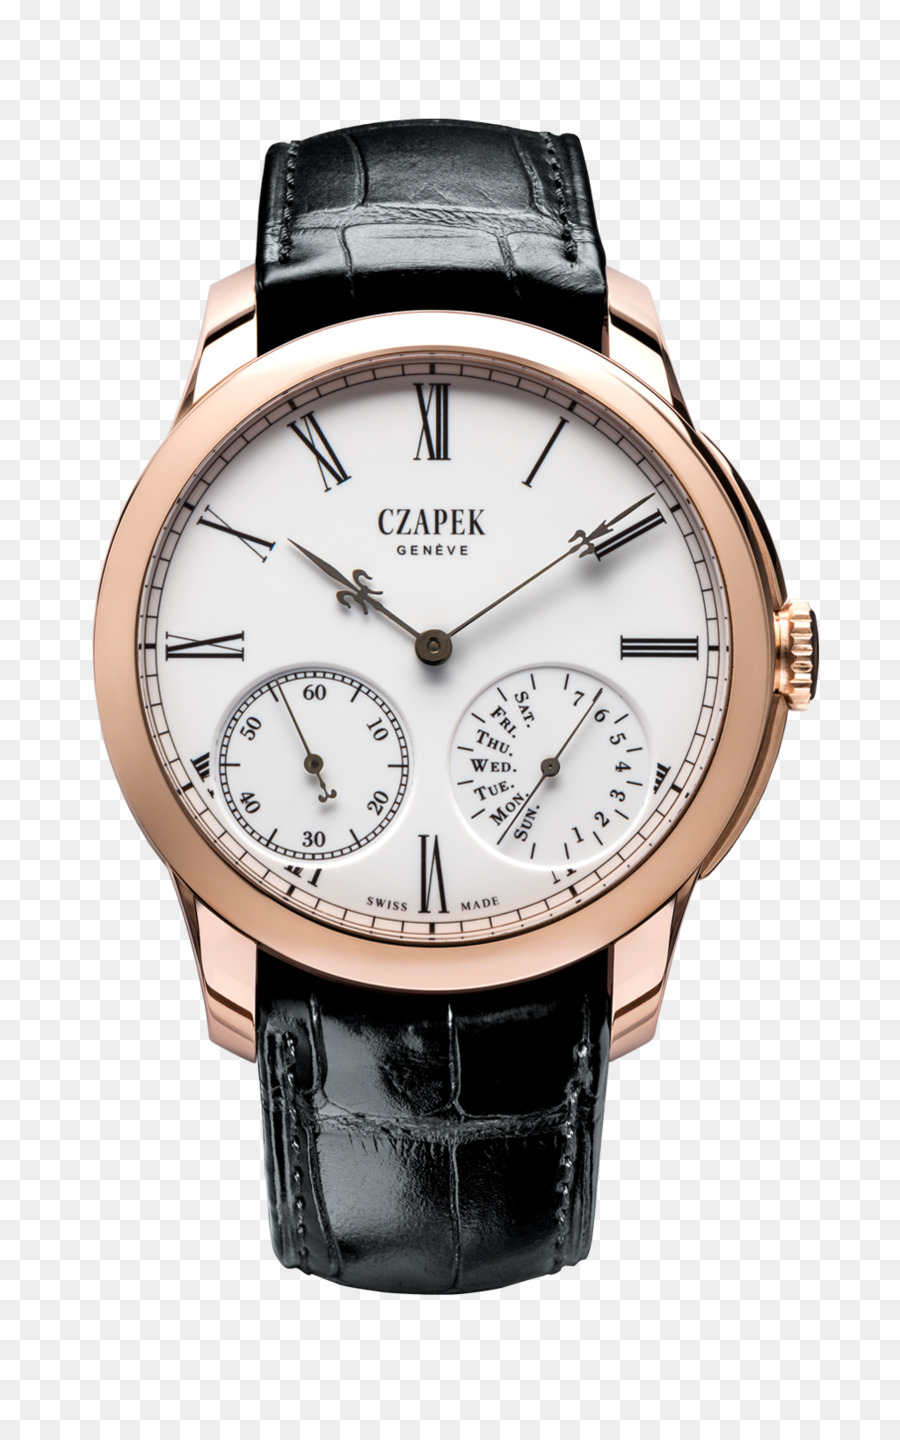 Breitling SA Uhrmacher Cartier Uhrmacher - Uhr